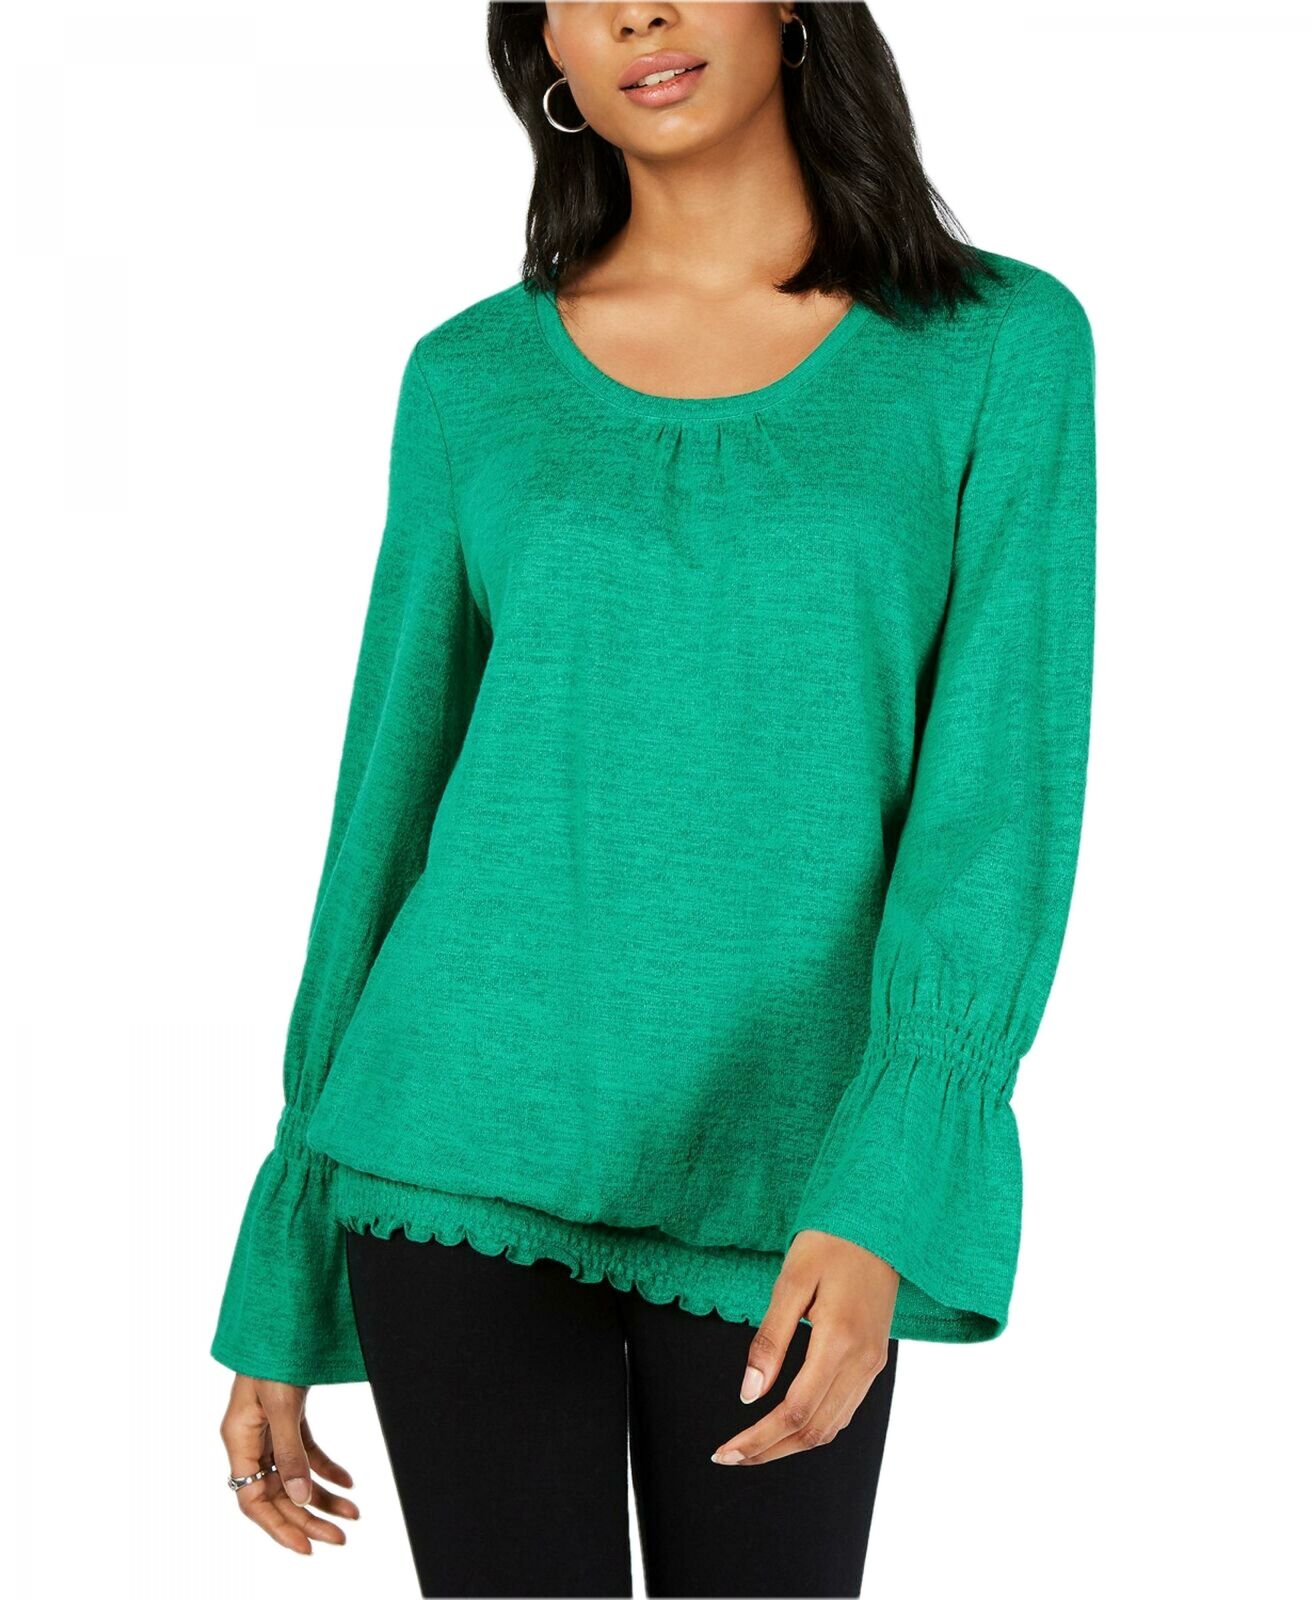 NWT Style & Co Womens Smocked-Hem Top Shirt. 100047526MS | eBay